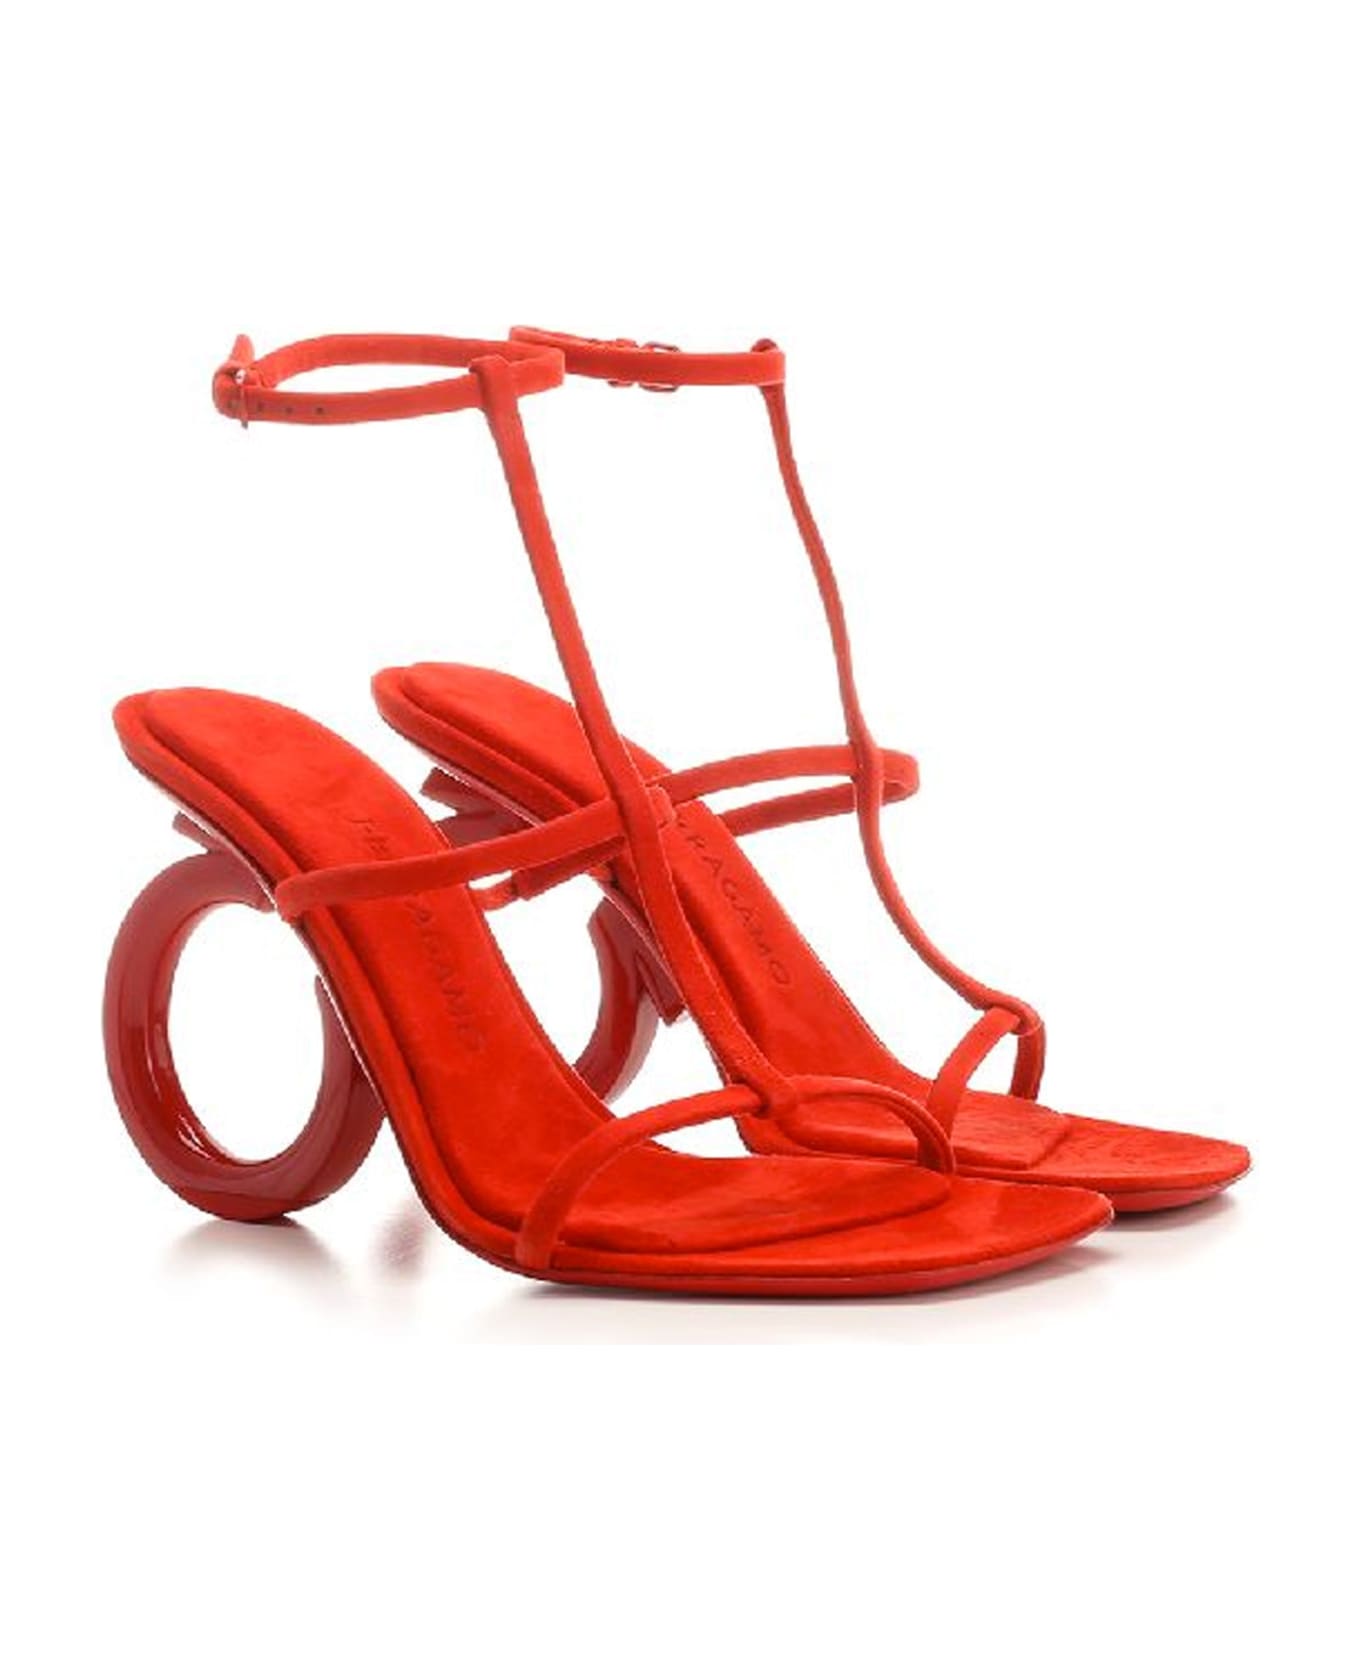 Ferragamo Elina Leather Sandals - Red